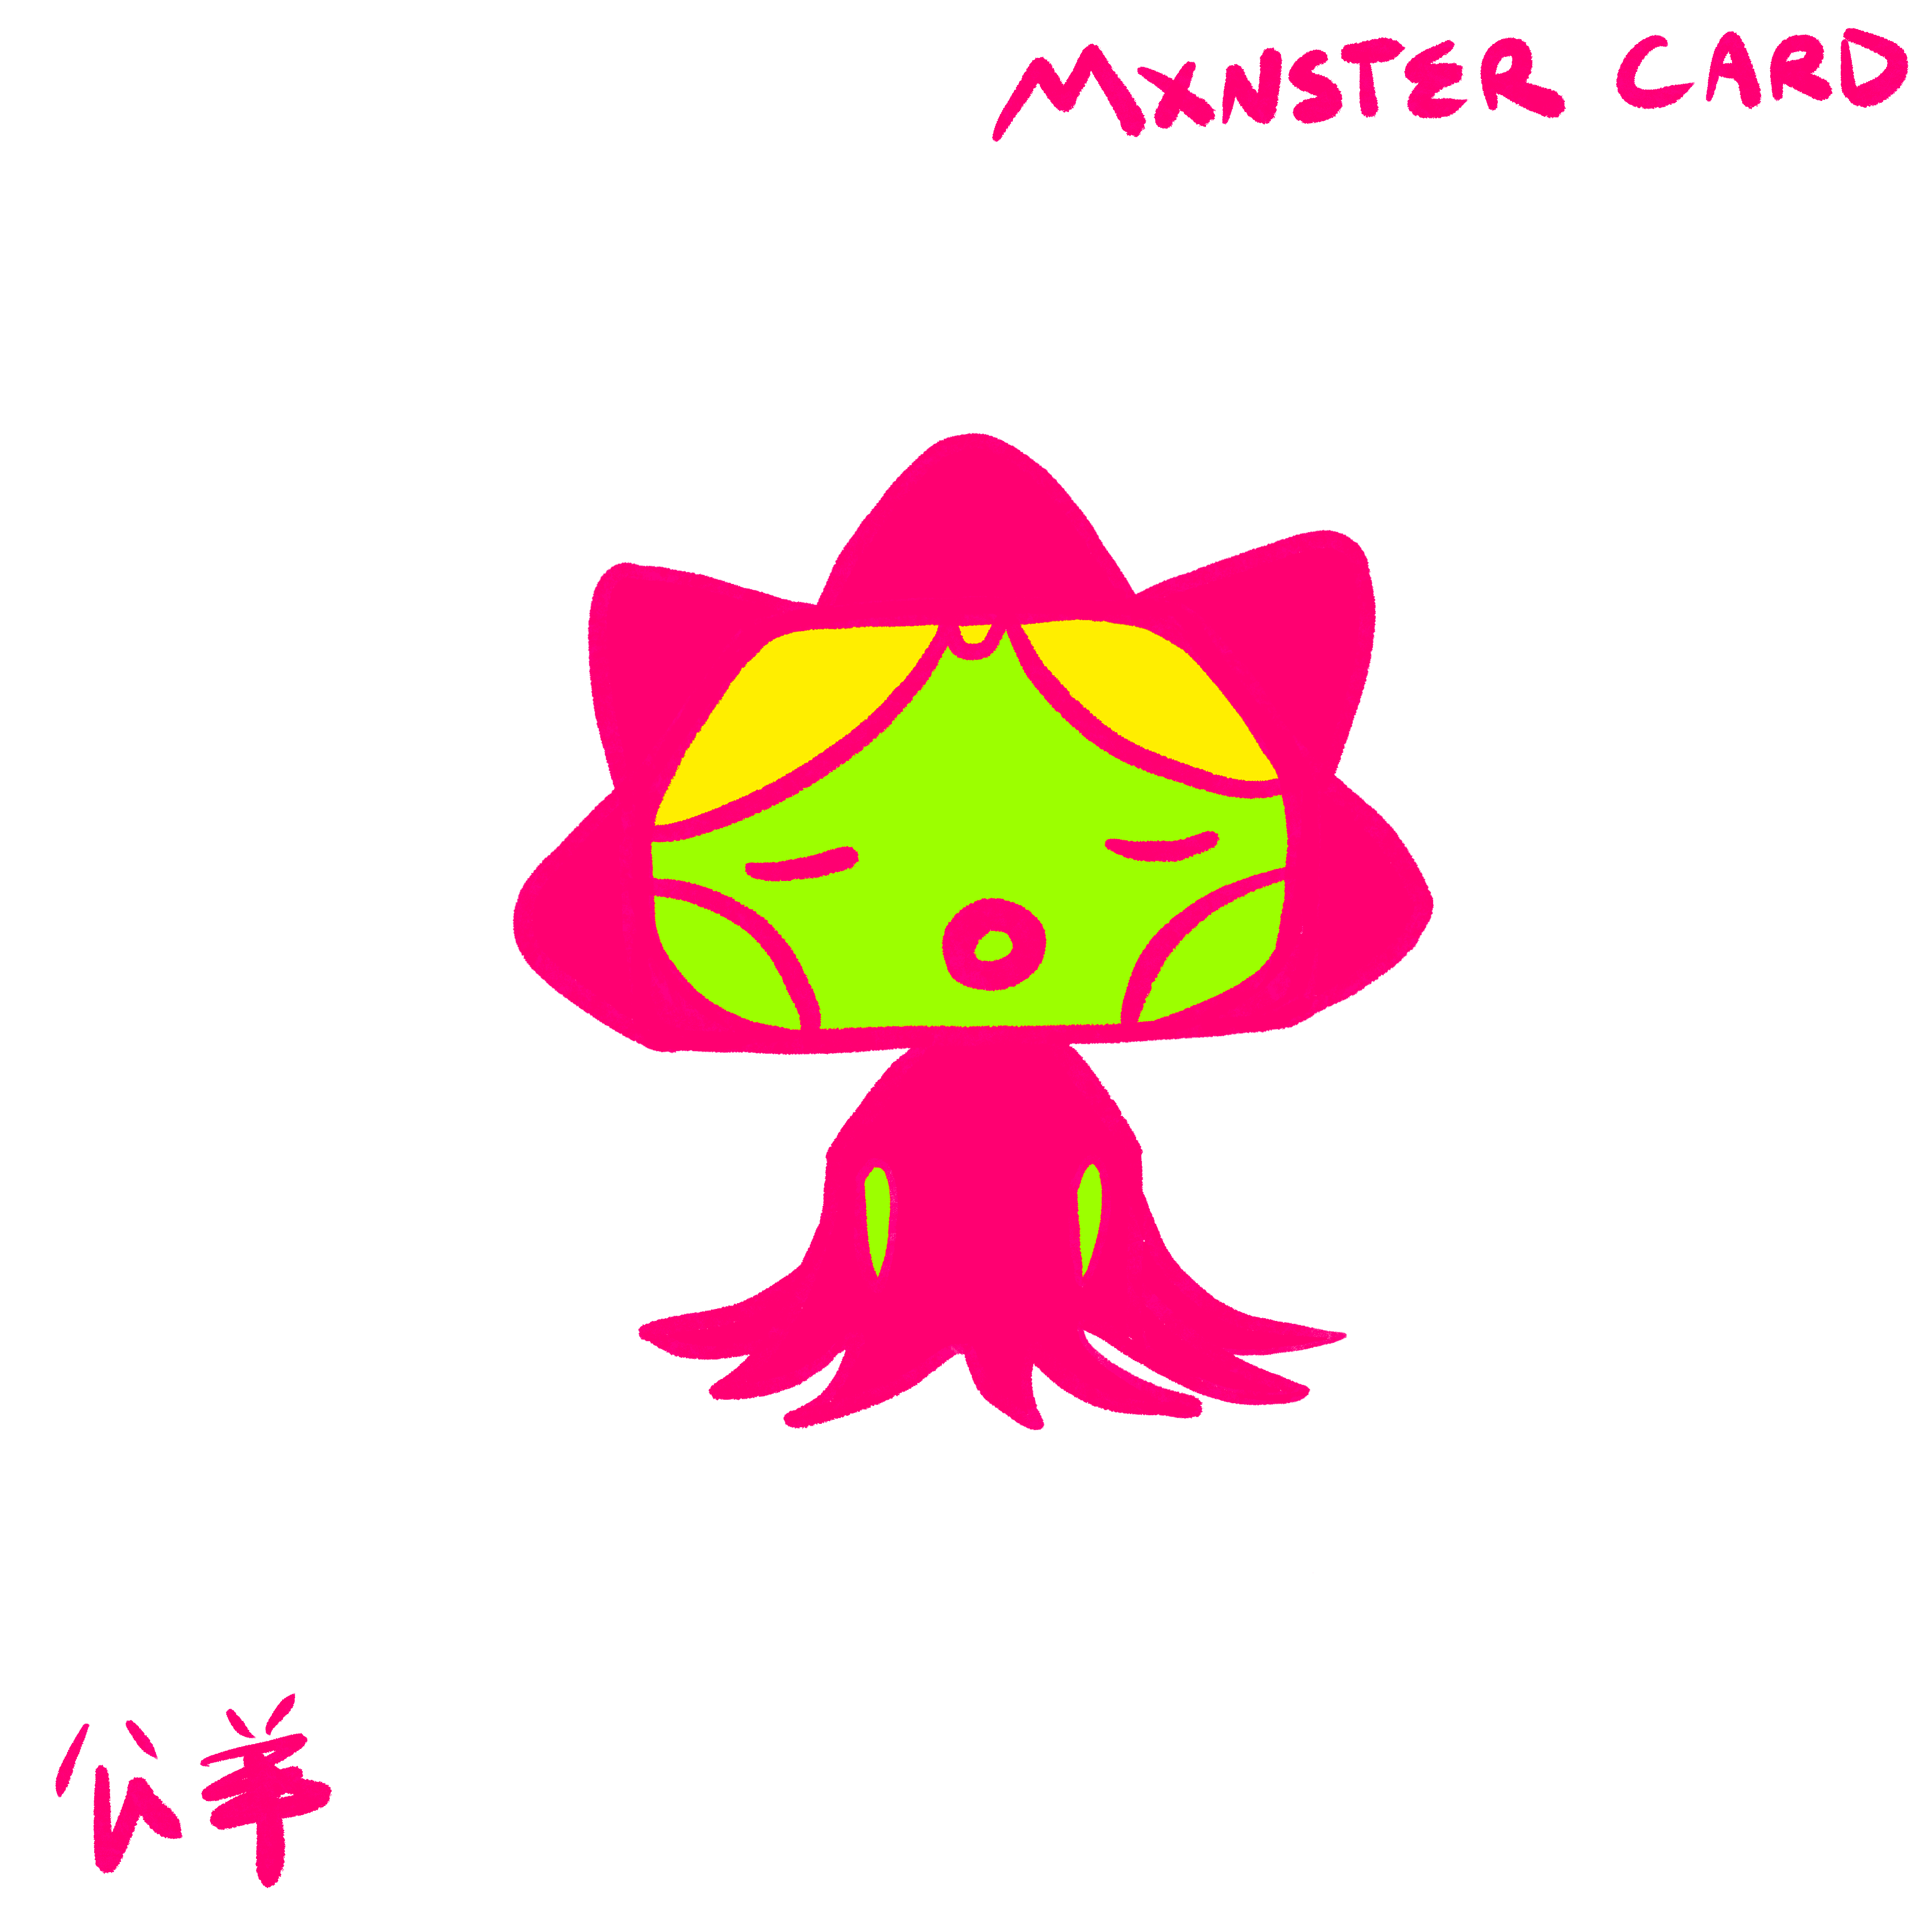 Mxnster Card 21